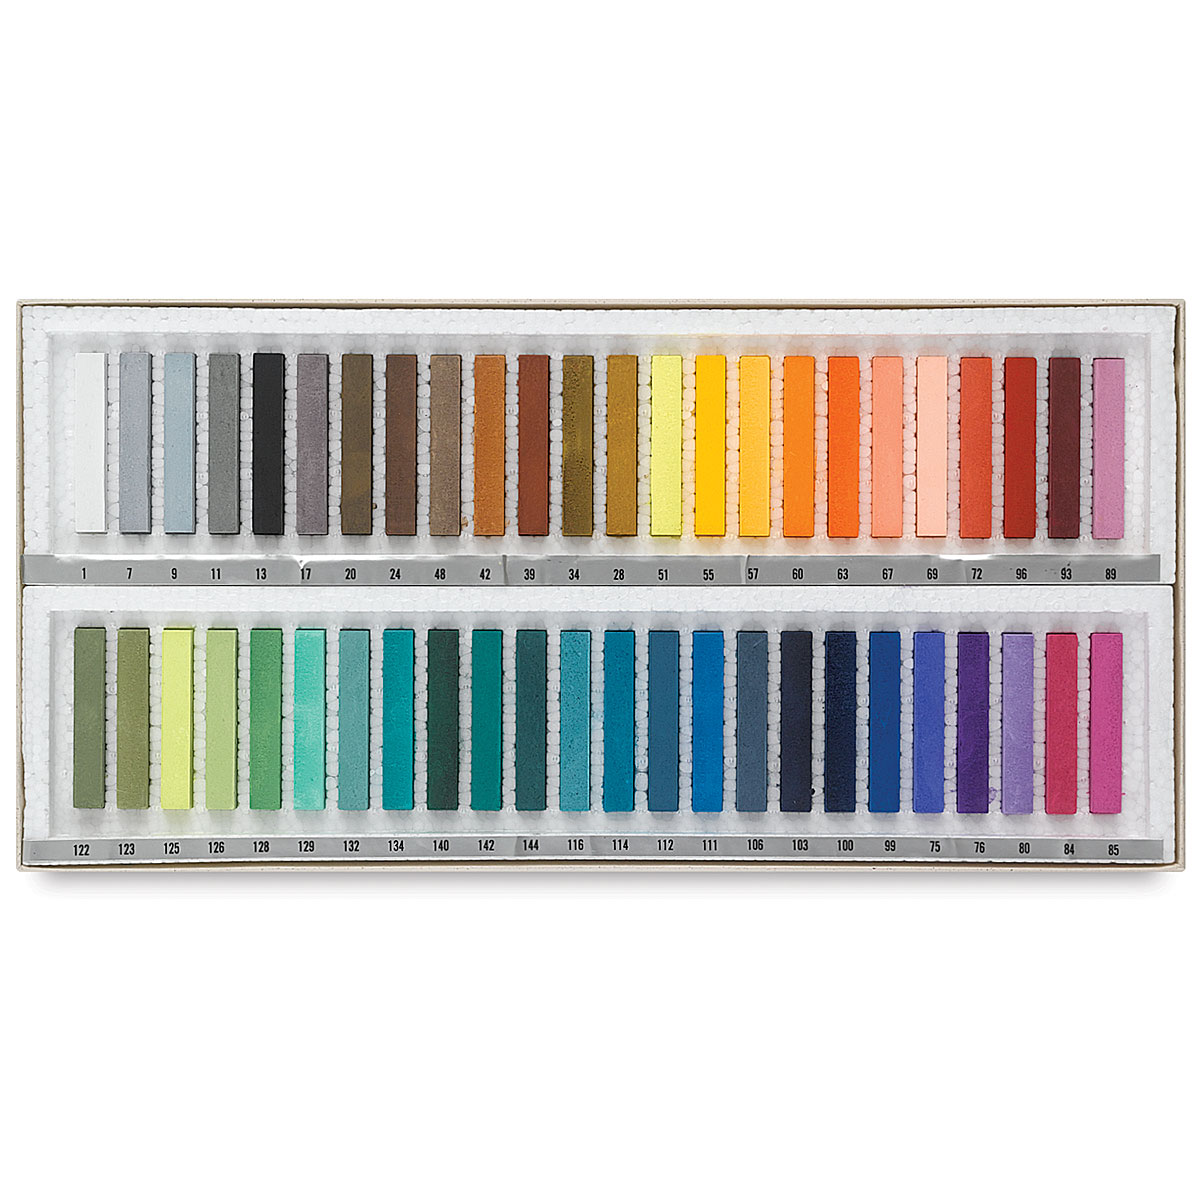 Holbein Soft Pastel S956 100 colors set – Art Supplies Japan